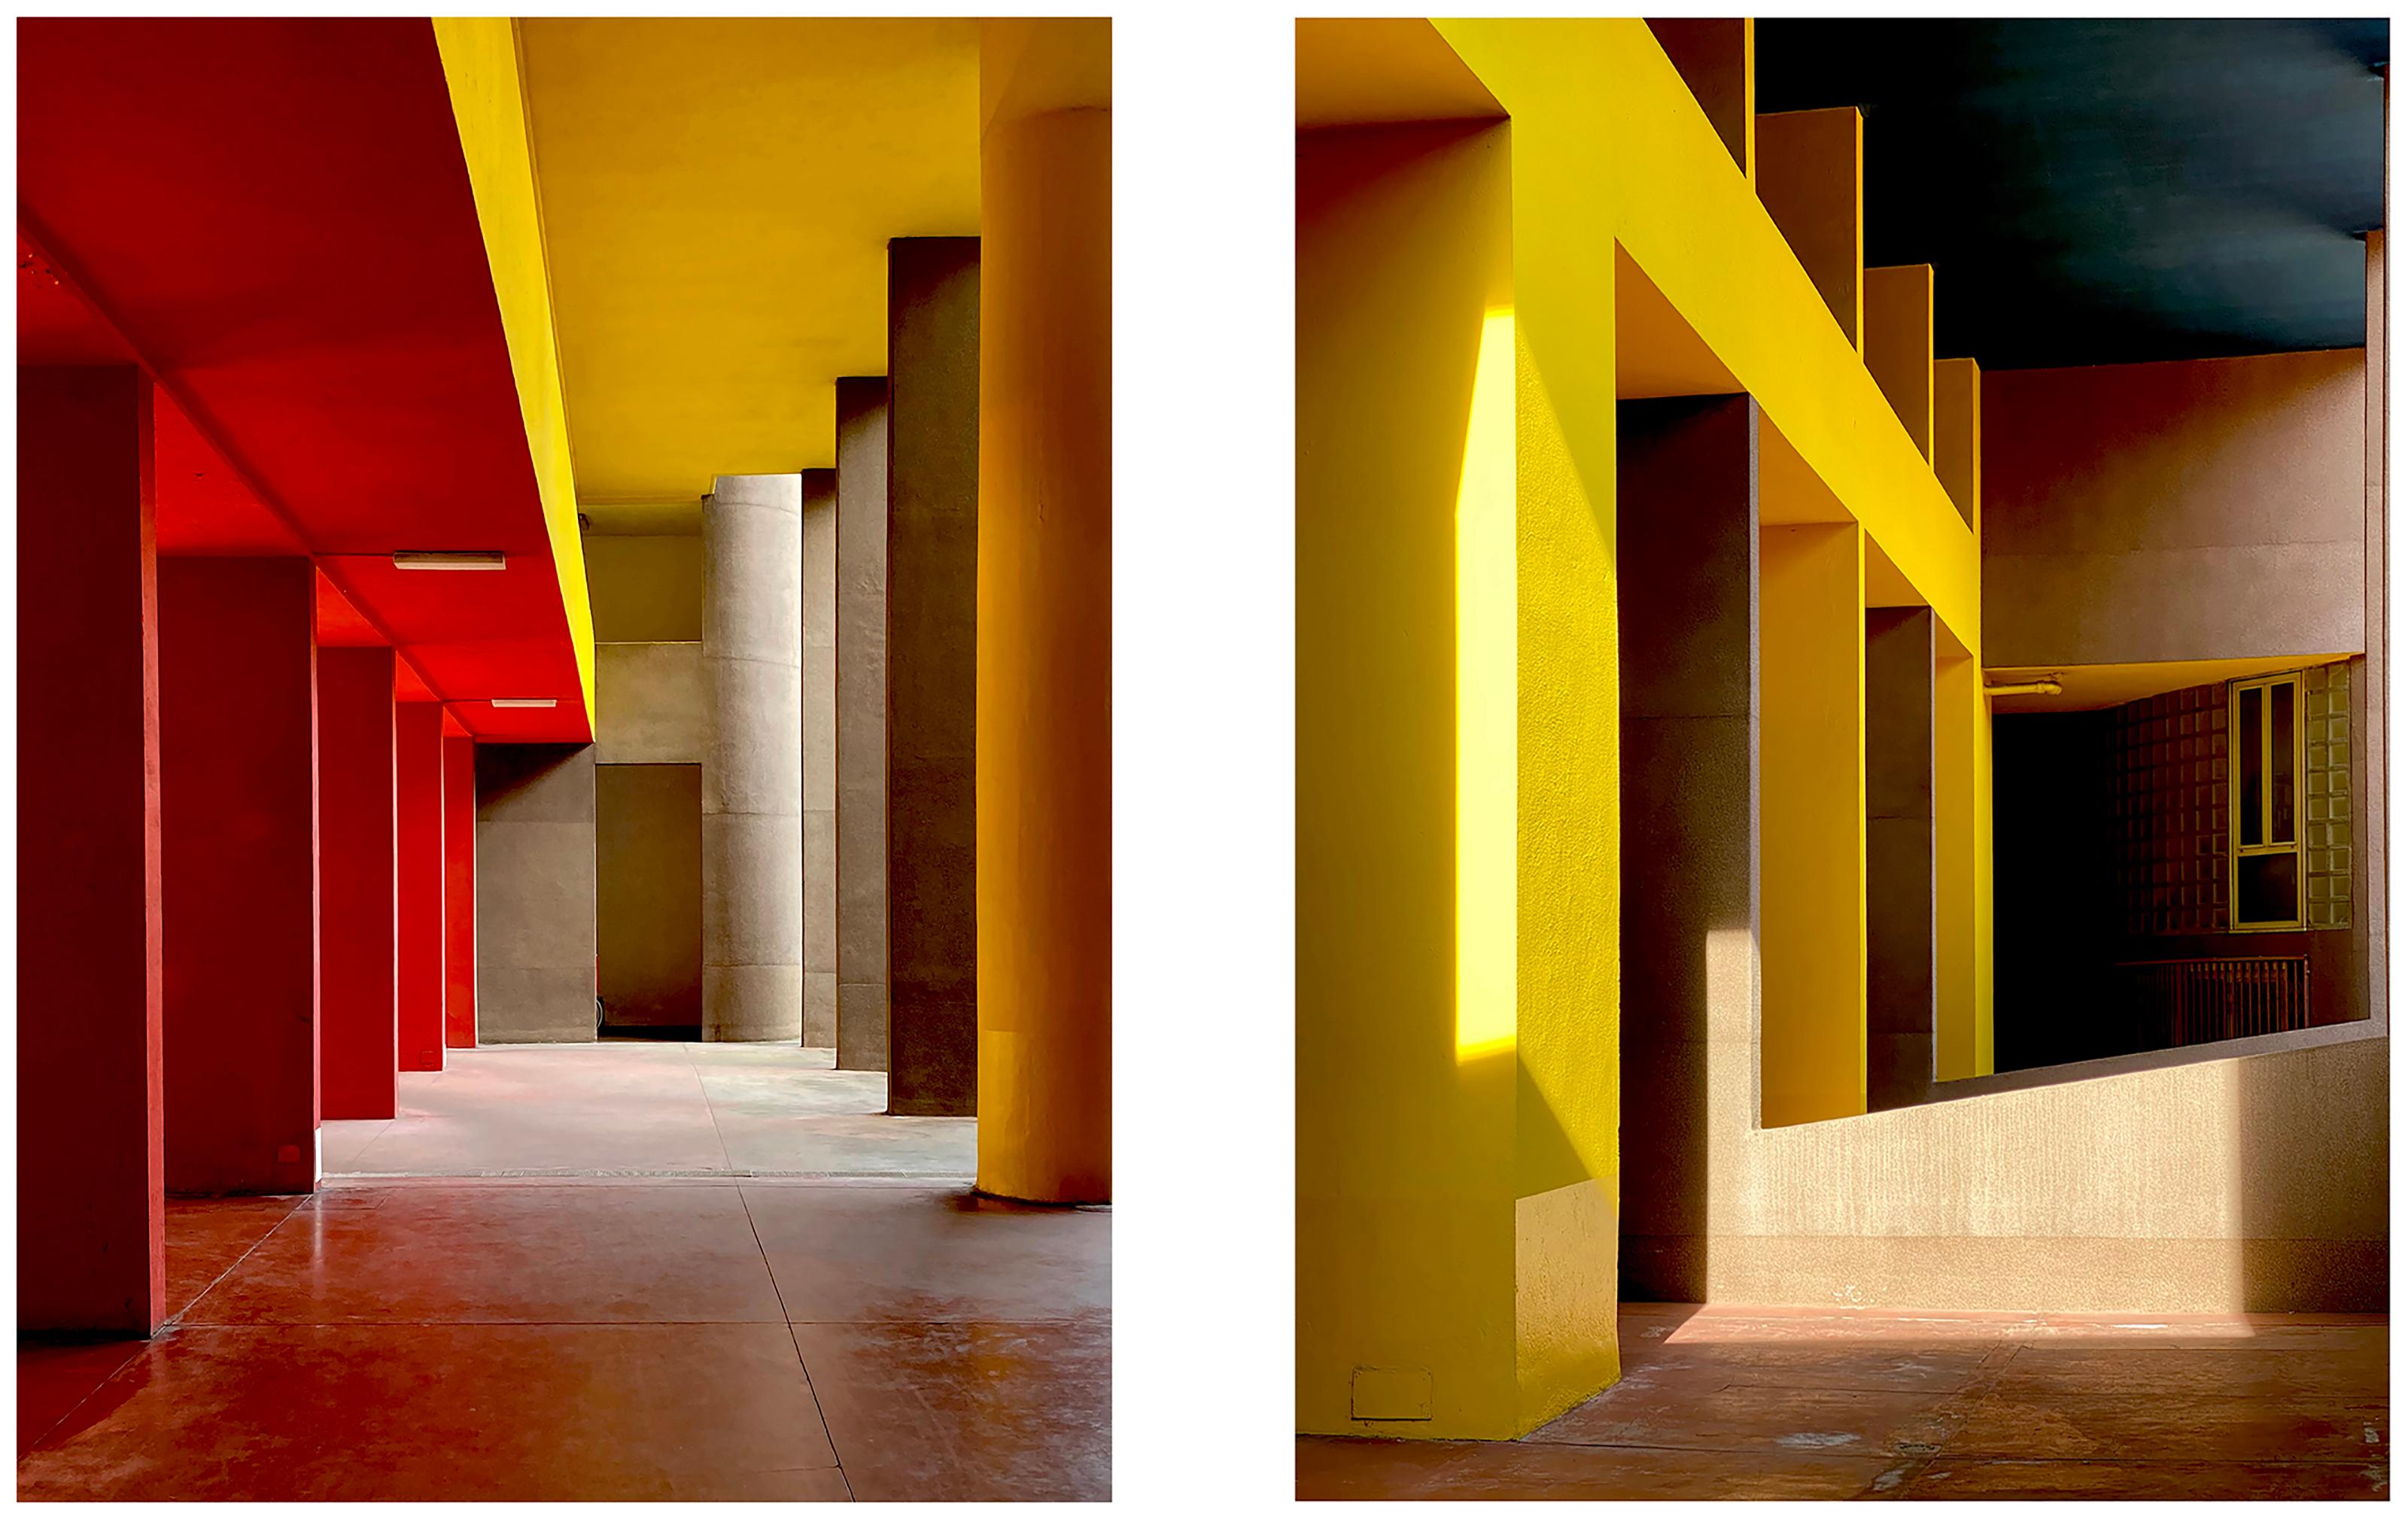 Richard Heeps Print - Monte Amiata I and Utopian Foyer IV, Milan - Two Framed Architecture Photographs